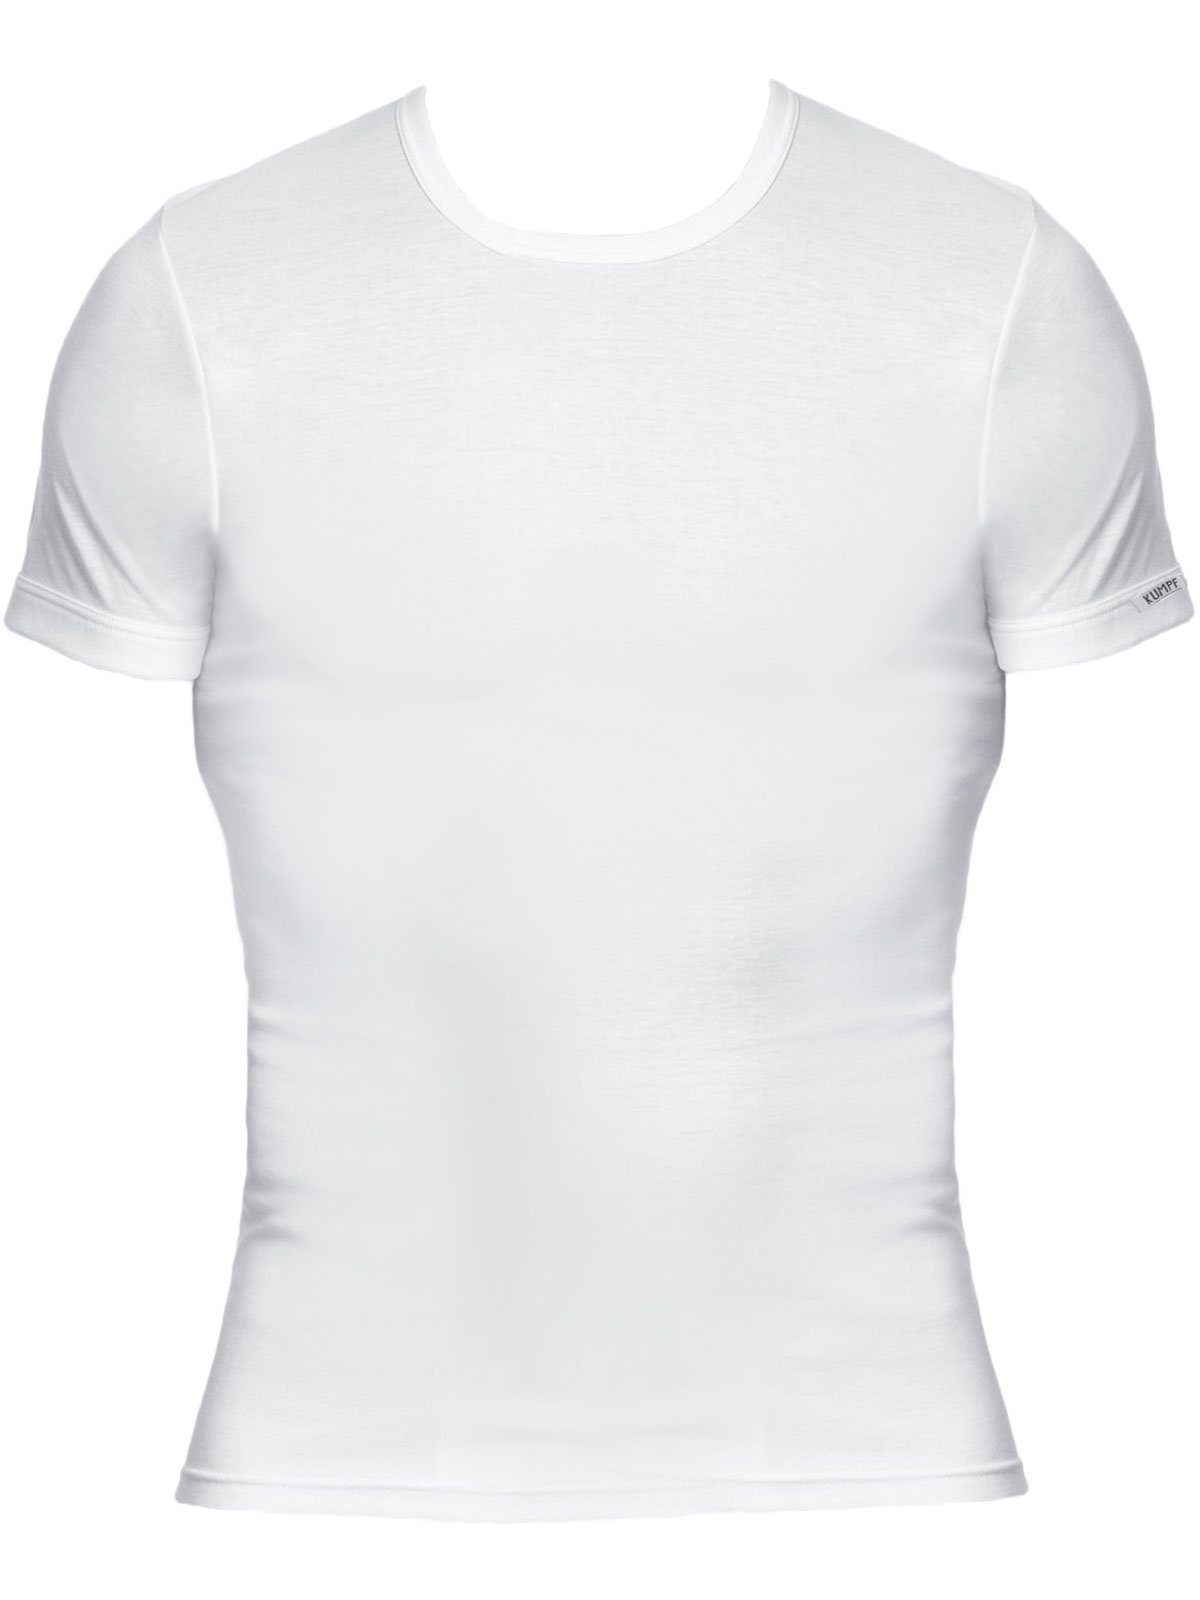 Unterziehshirt stahlgrau-melange Sparpack Markenqualität (Spar-Set, Cotton hohe 2-St) Herren Bio T-Shirt KUMPF 2er weiss